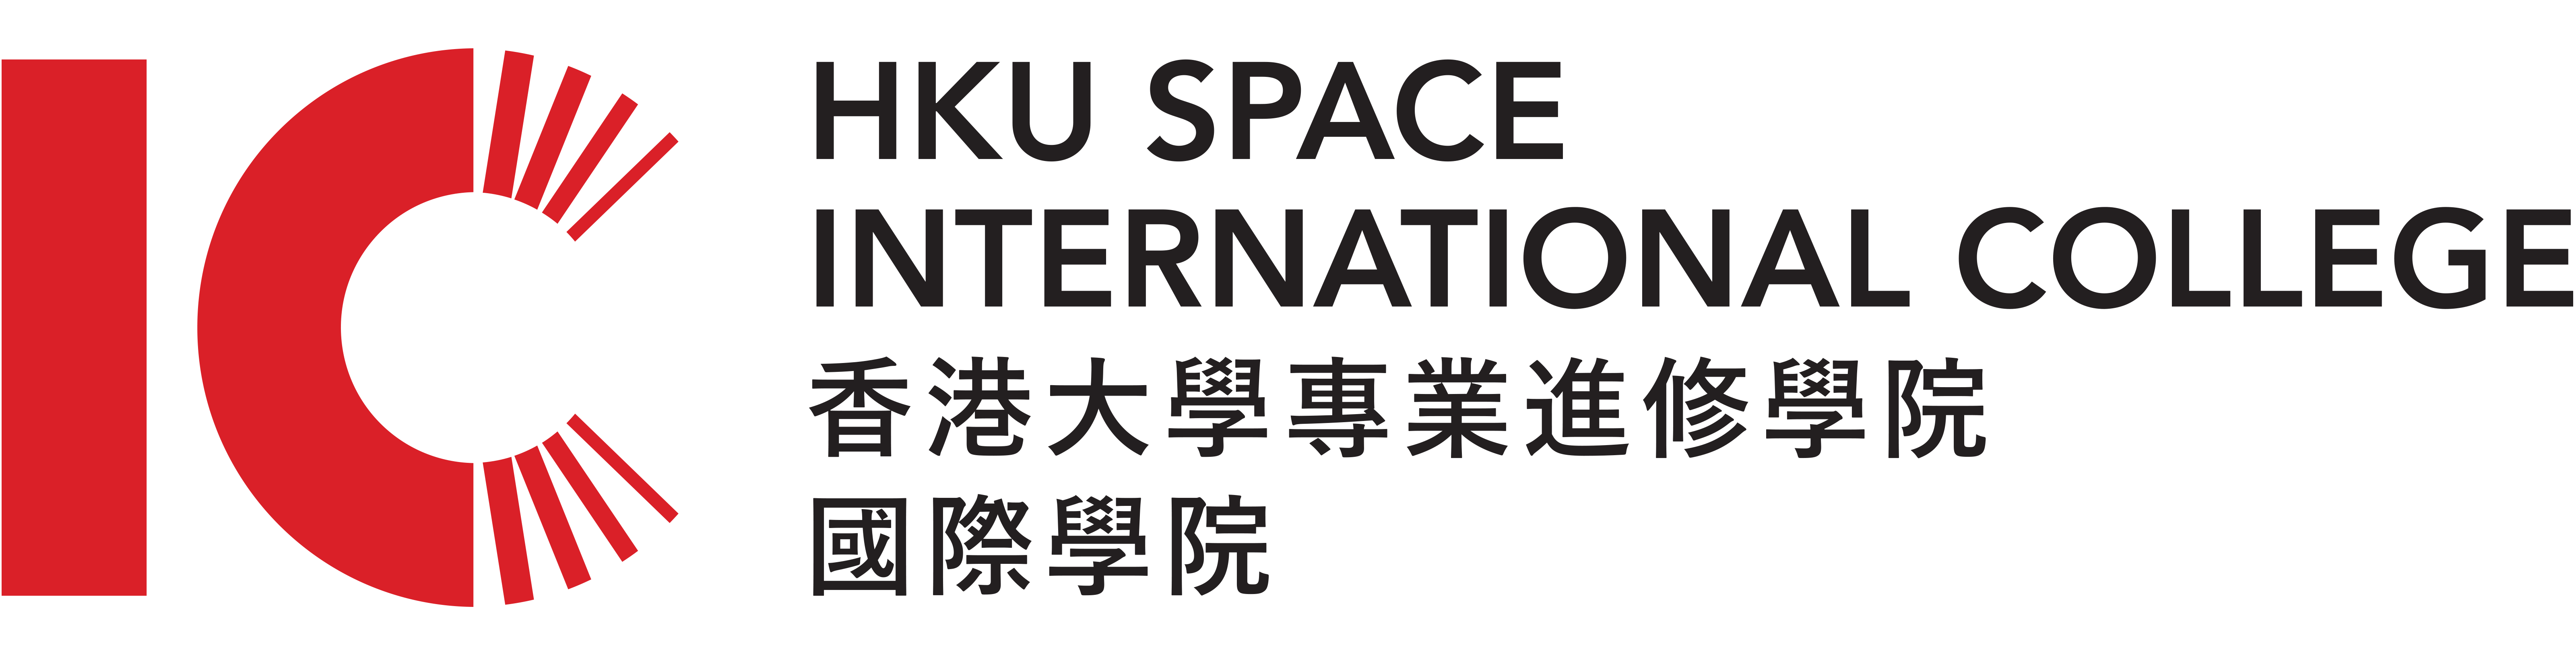 IC Logo - File:HKU SPACE IC logo.png - Wikimedia Commons